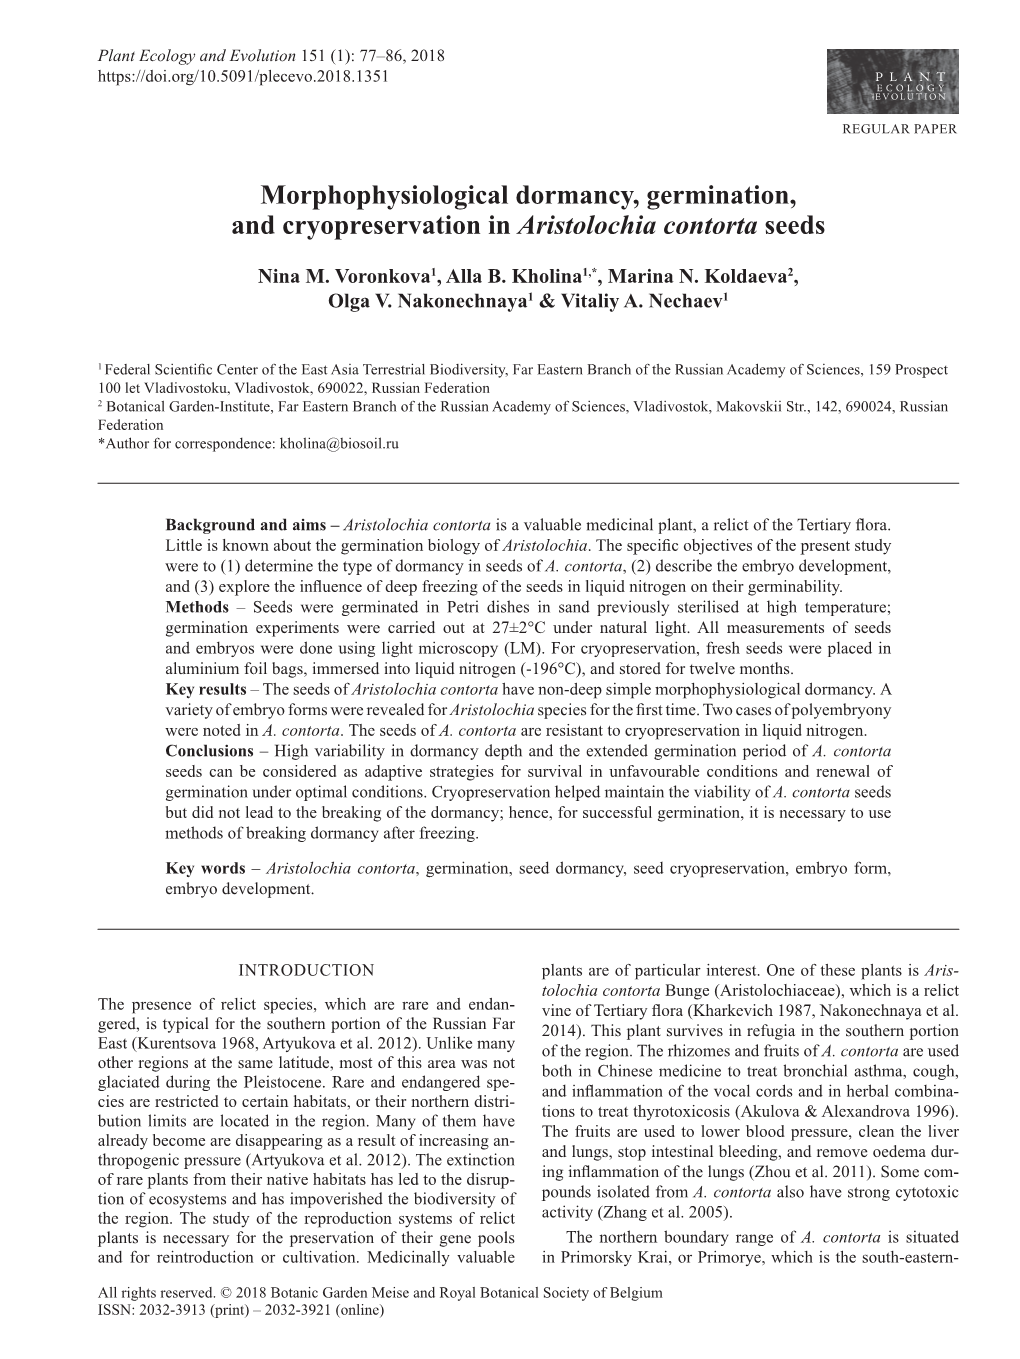 Morphophysiological Dormancy, Germination, and Cryopreservation in Aristolochia Contorta Seeds